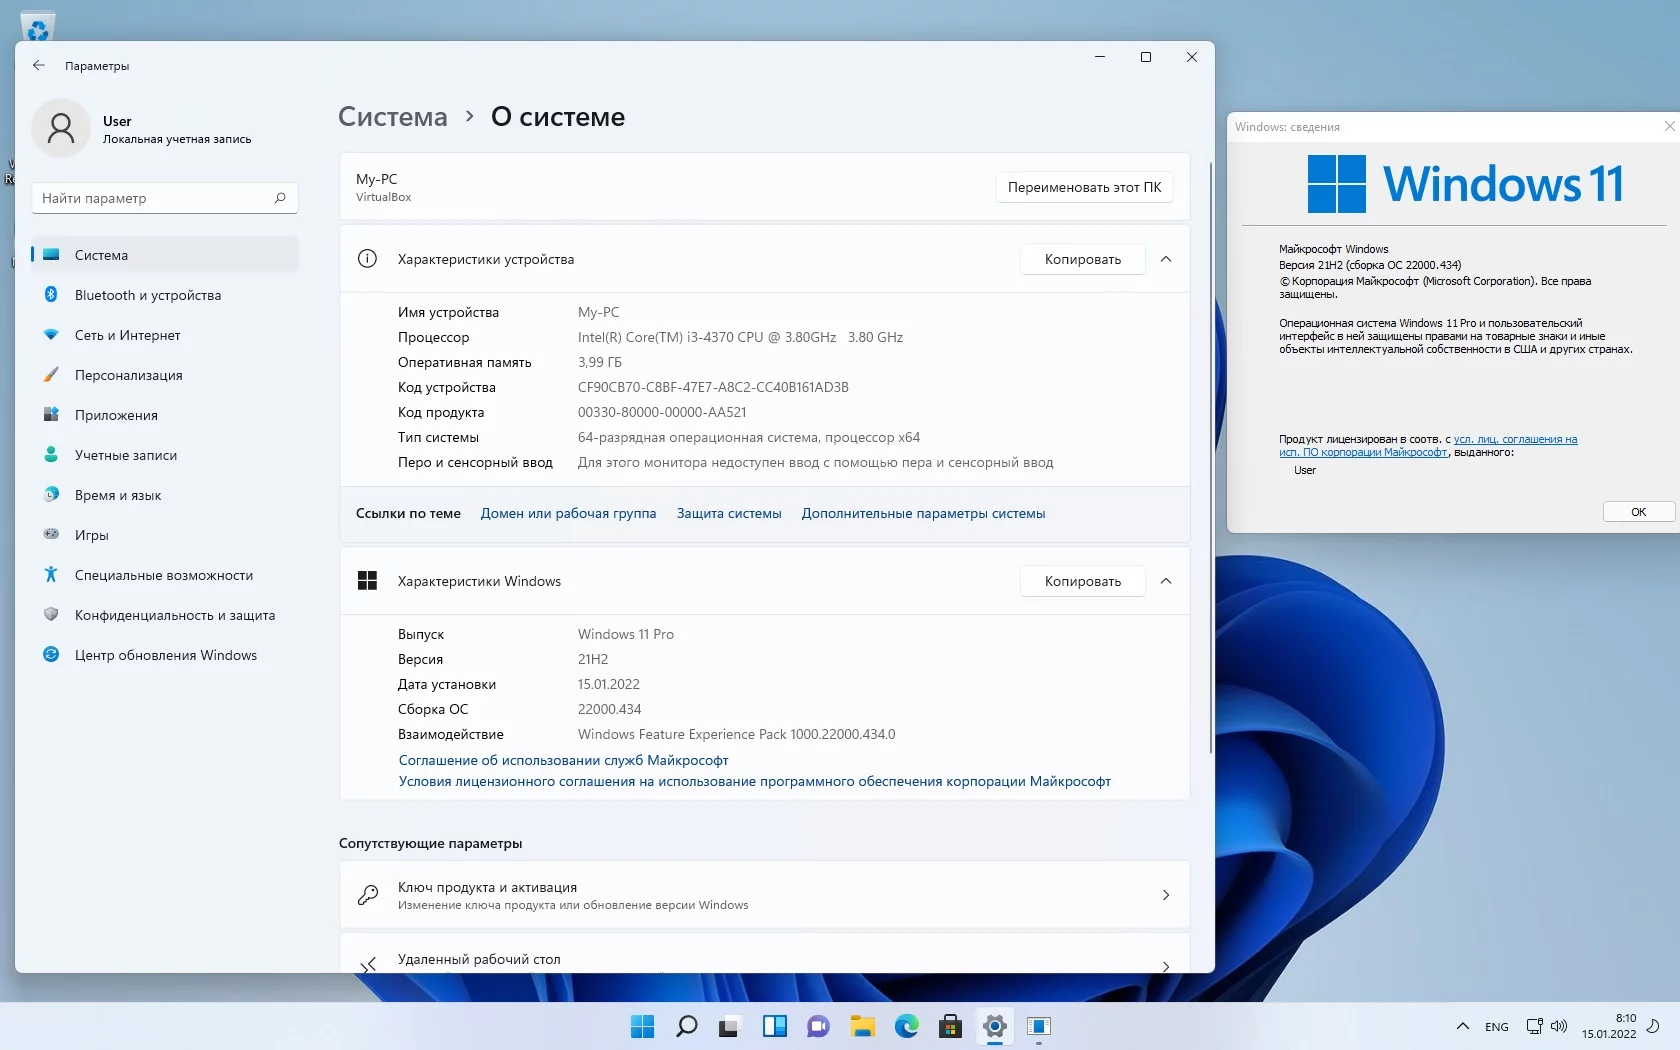 Windows 11 23h2 compact. Windows 11 Pro 21h2. Windows 11 обзор. Windows 11 характеристики. Обновление виндовс 11.